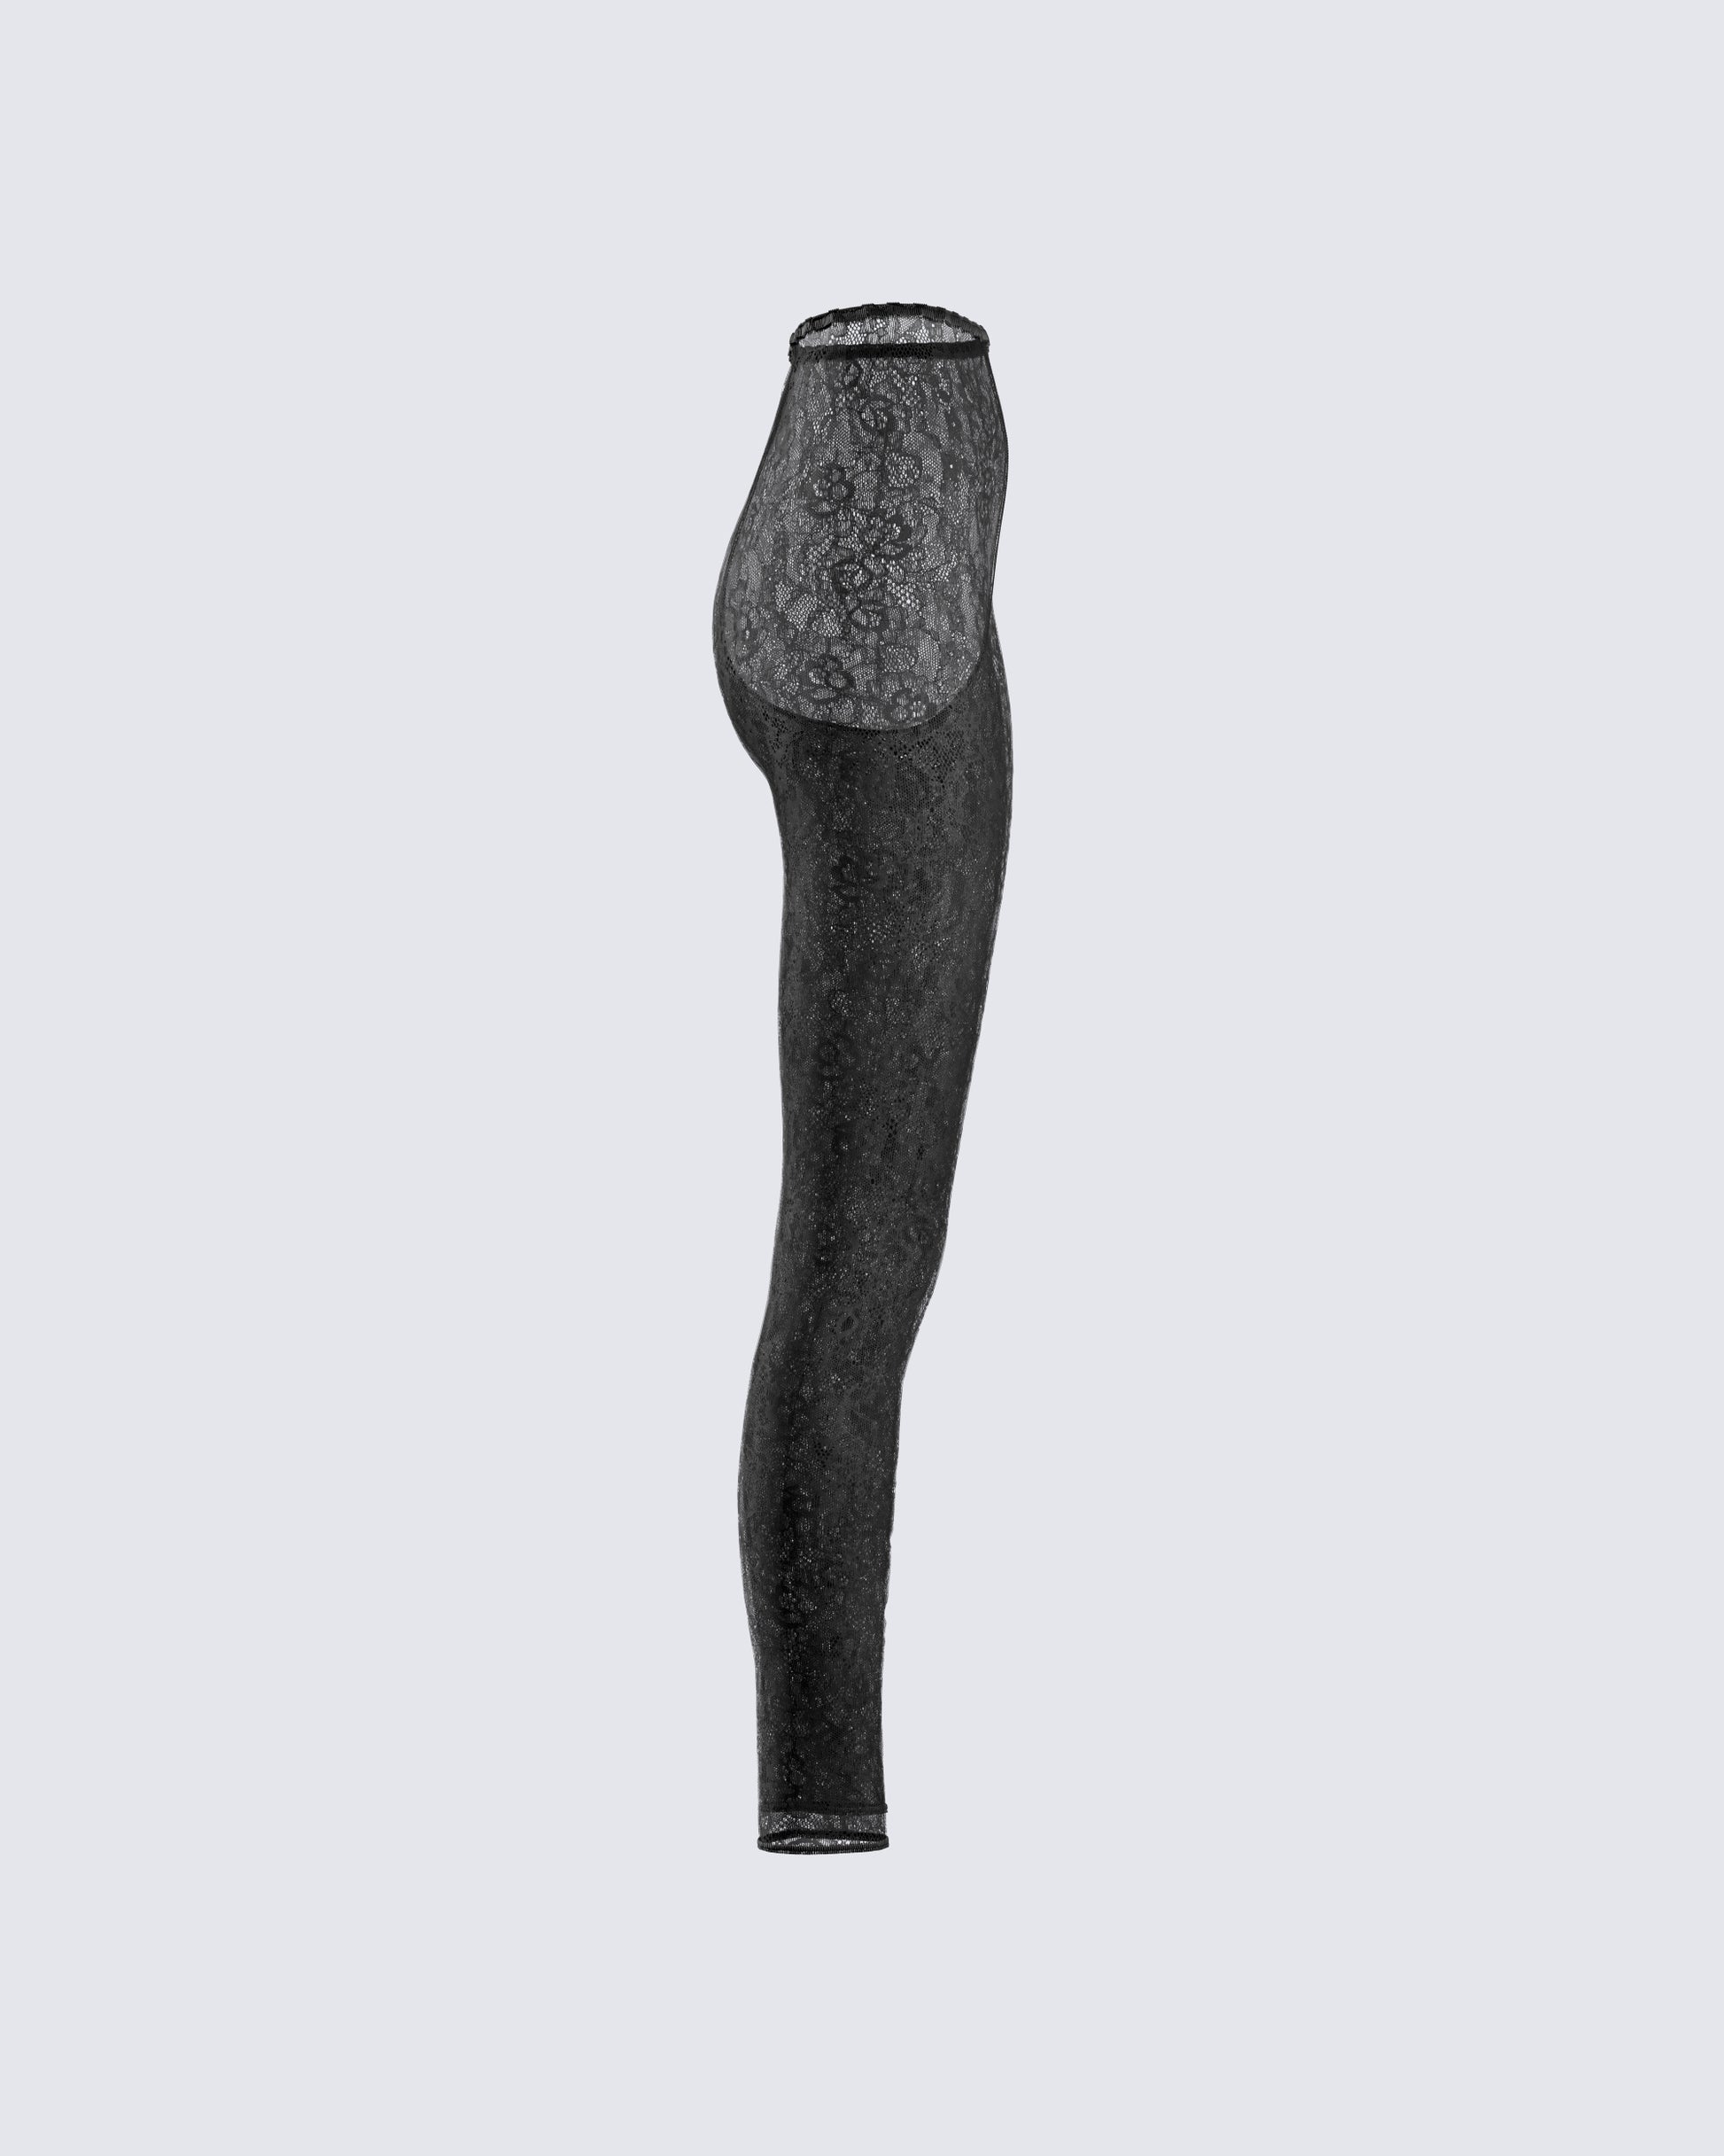 Rohnisch Ladies Thermo Zip Leggings in Black - Last Pair XS Only Left –  GolfGarb